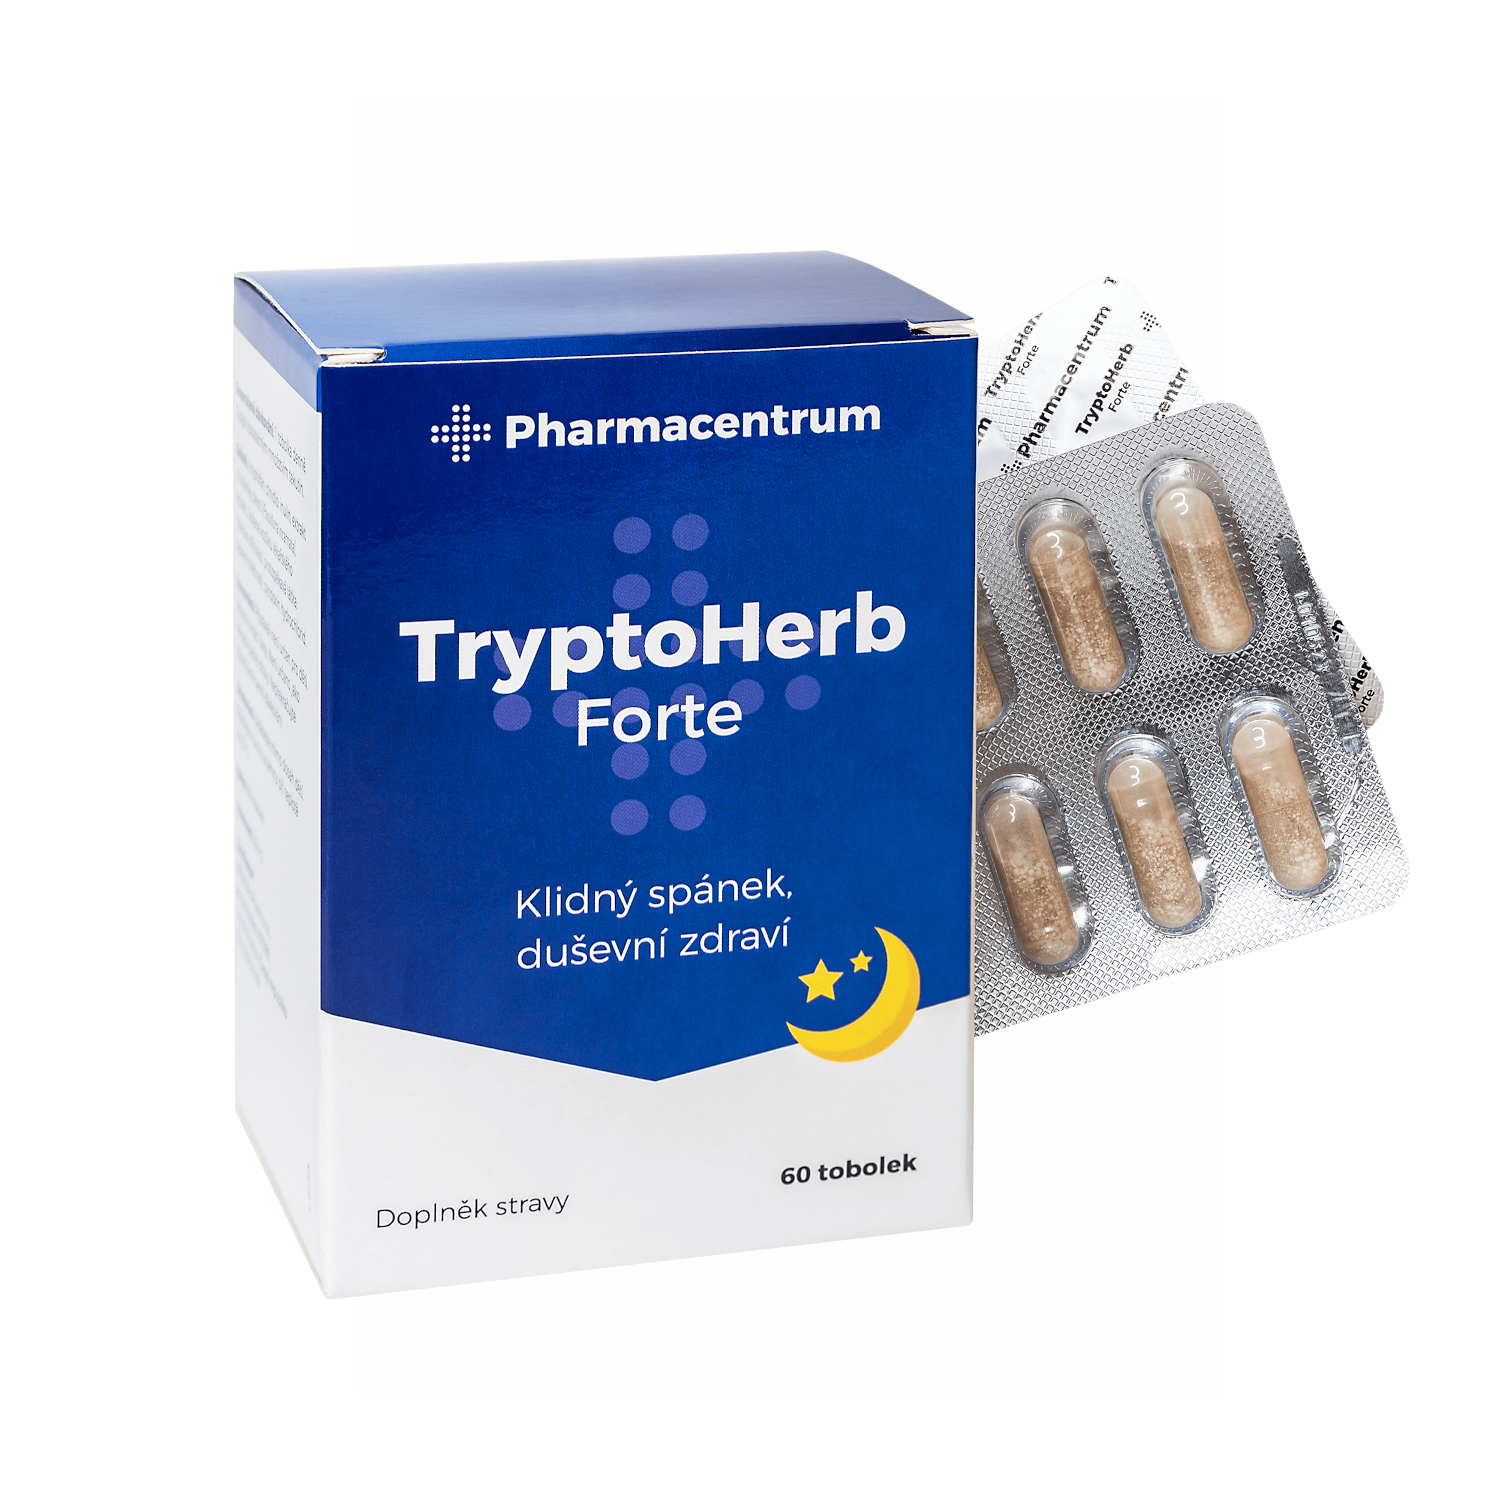 Pharmacentrum TryptoHerb Forte 60 tobolek